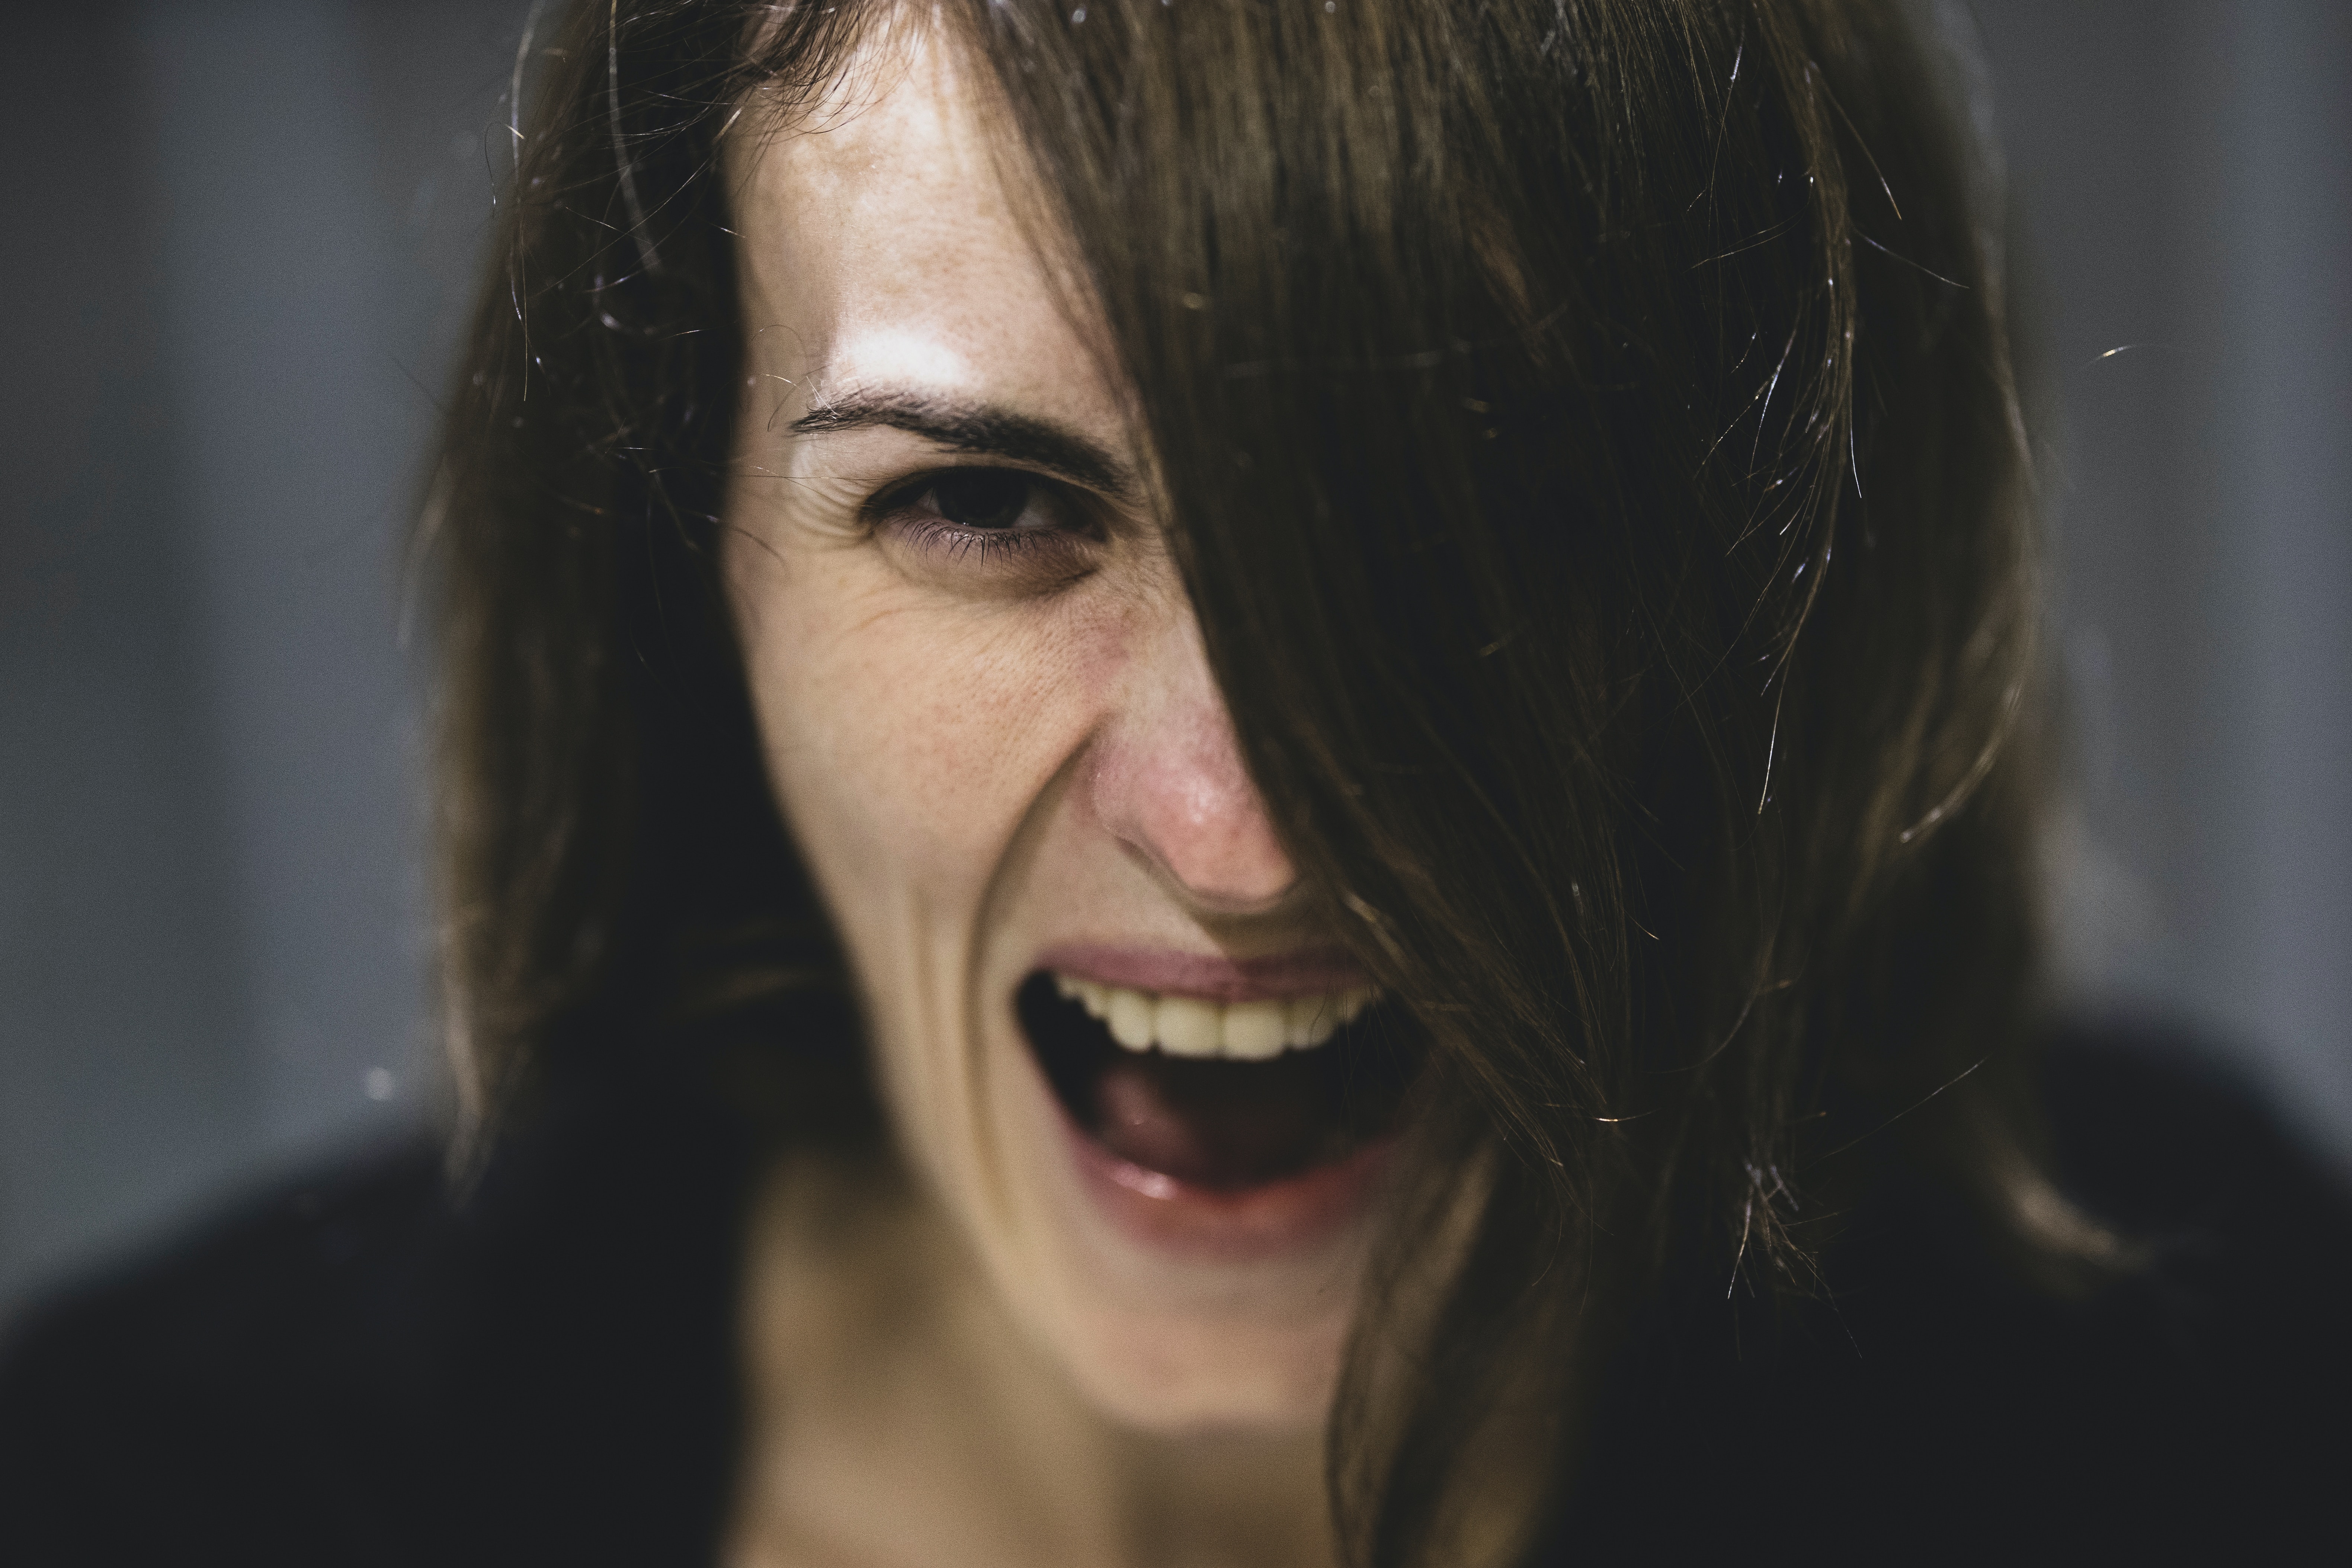 A woman screaming. | Source: Unsplash